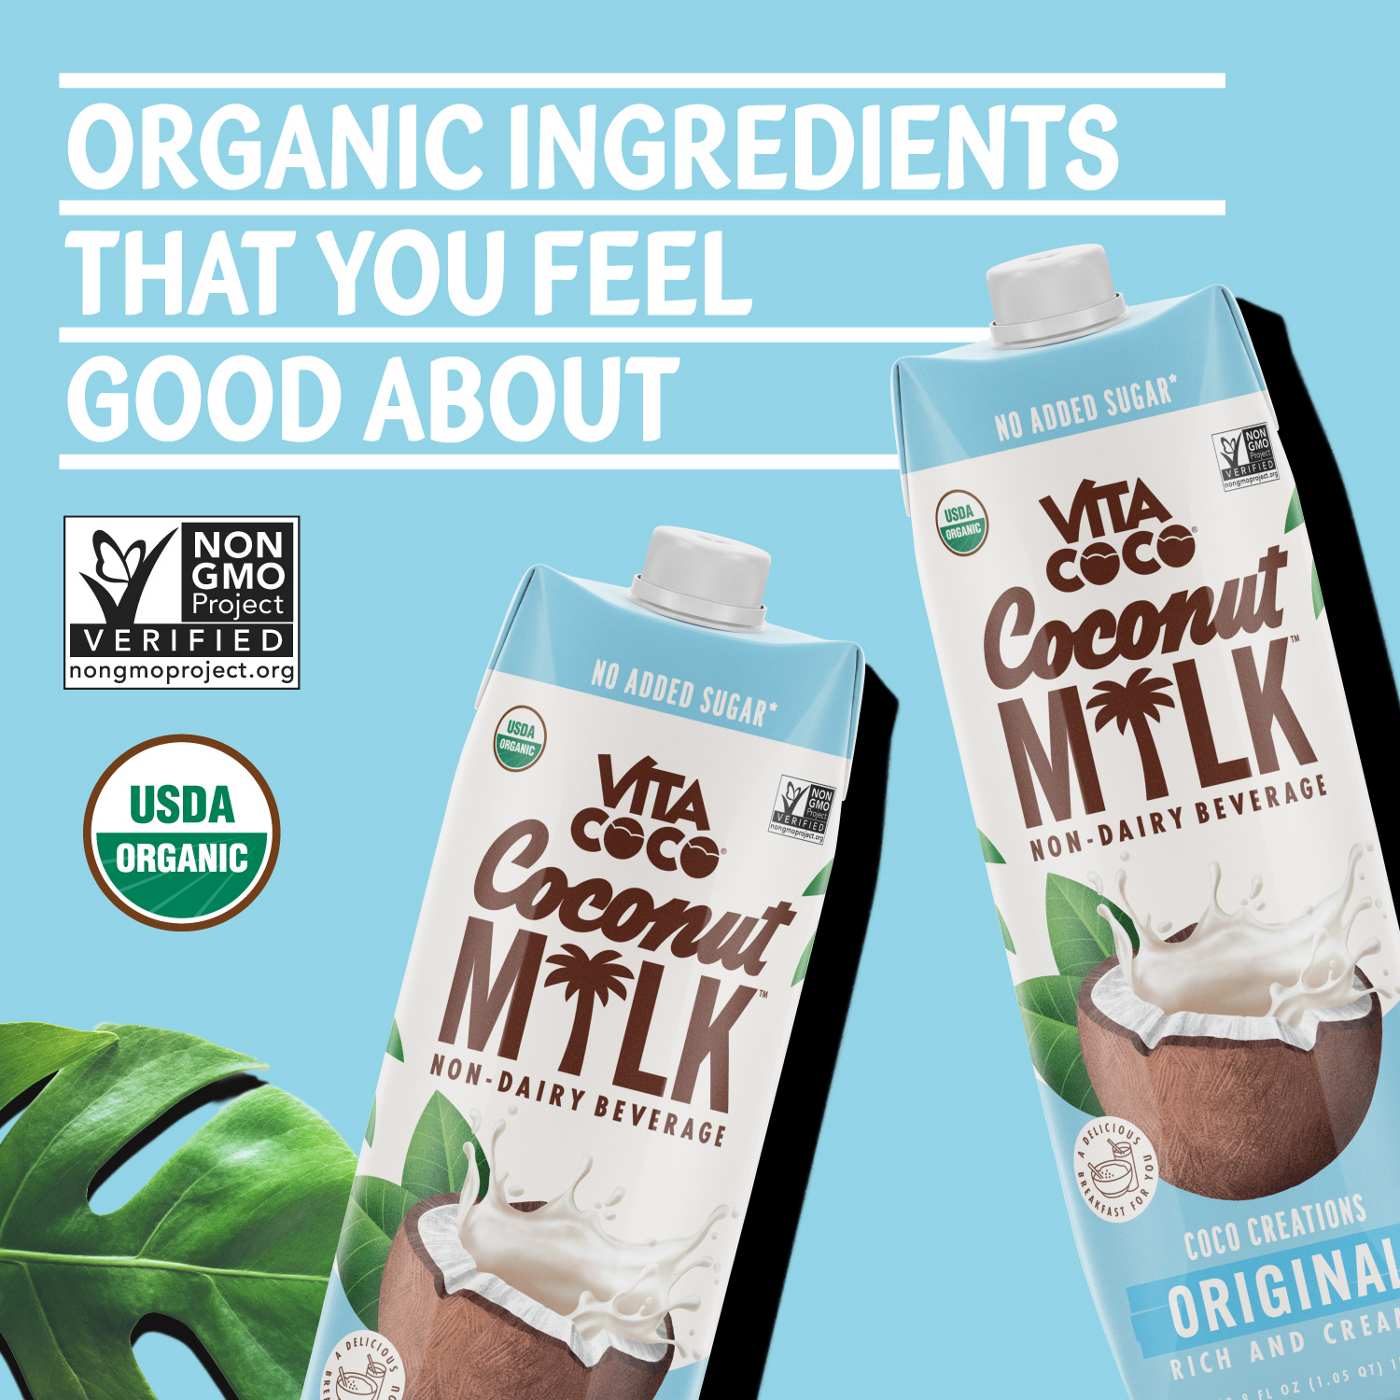 Vita Coco Coconut Milk Original Non Dairy Beverage; image 6 of 6